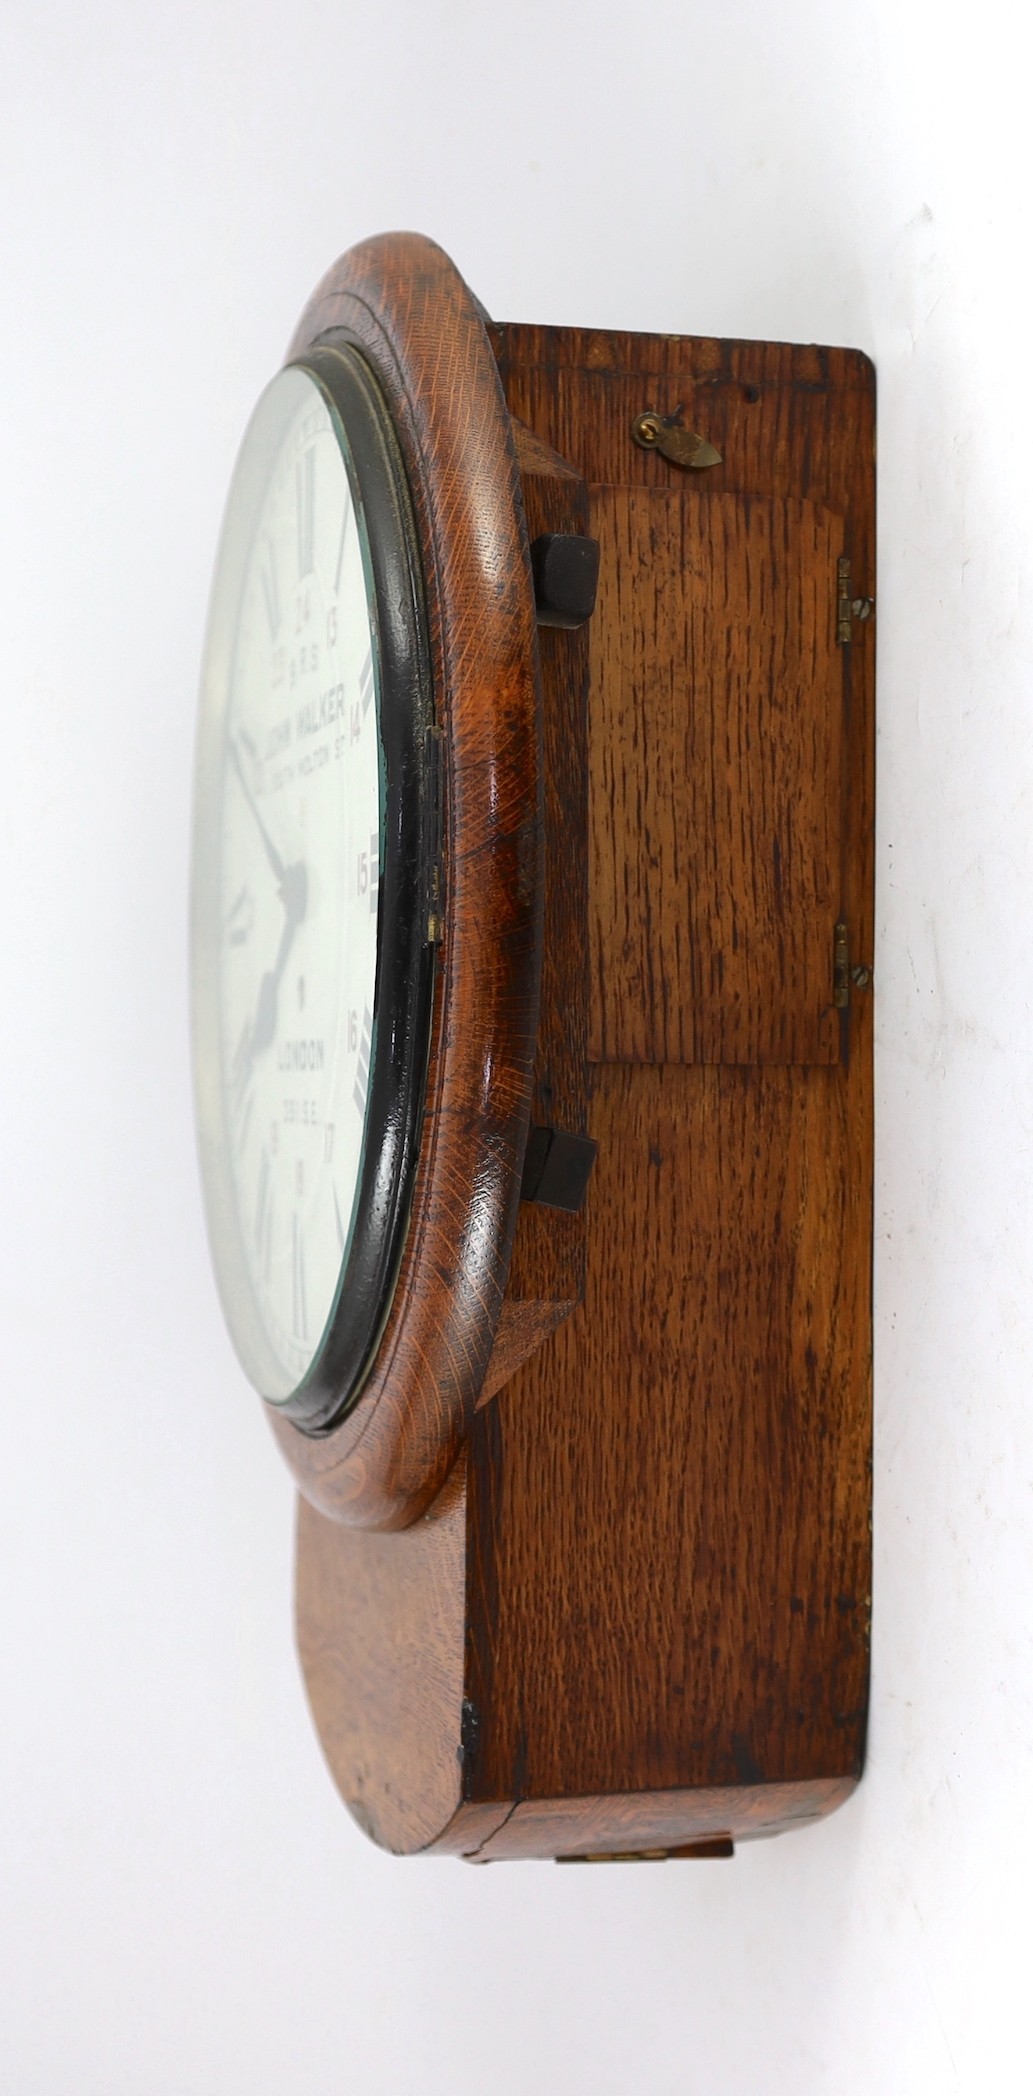 John Walker, South Milton St, London. An Edwardian oak cased drop dial wall timepiece with British Rail South inscription, width 37cm height 46cm